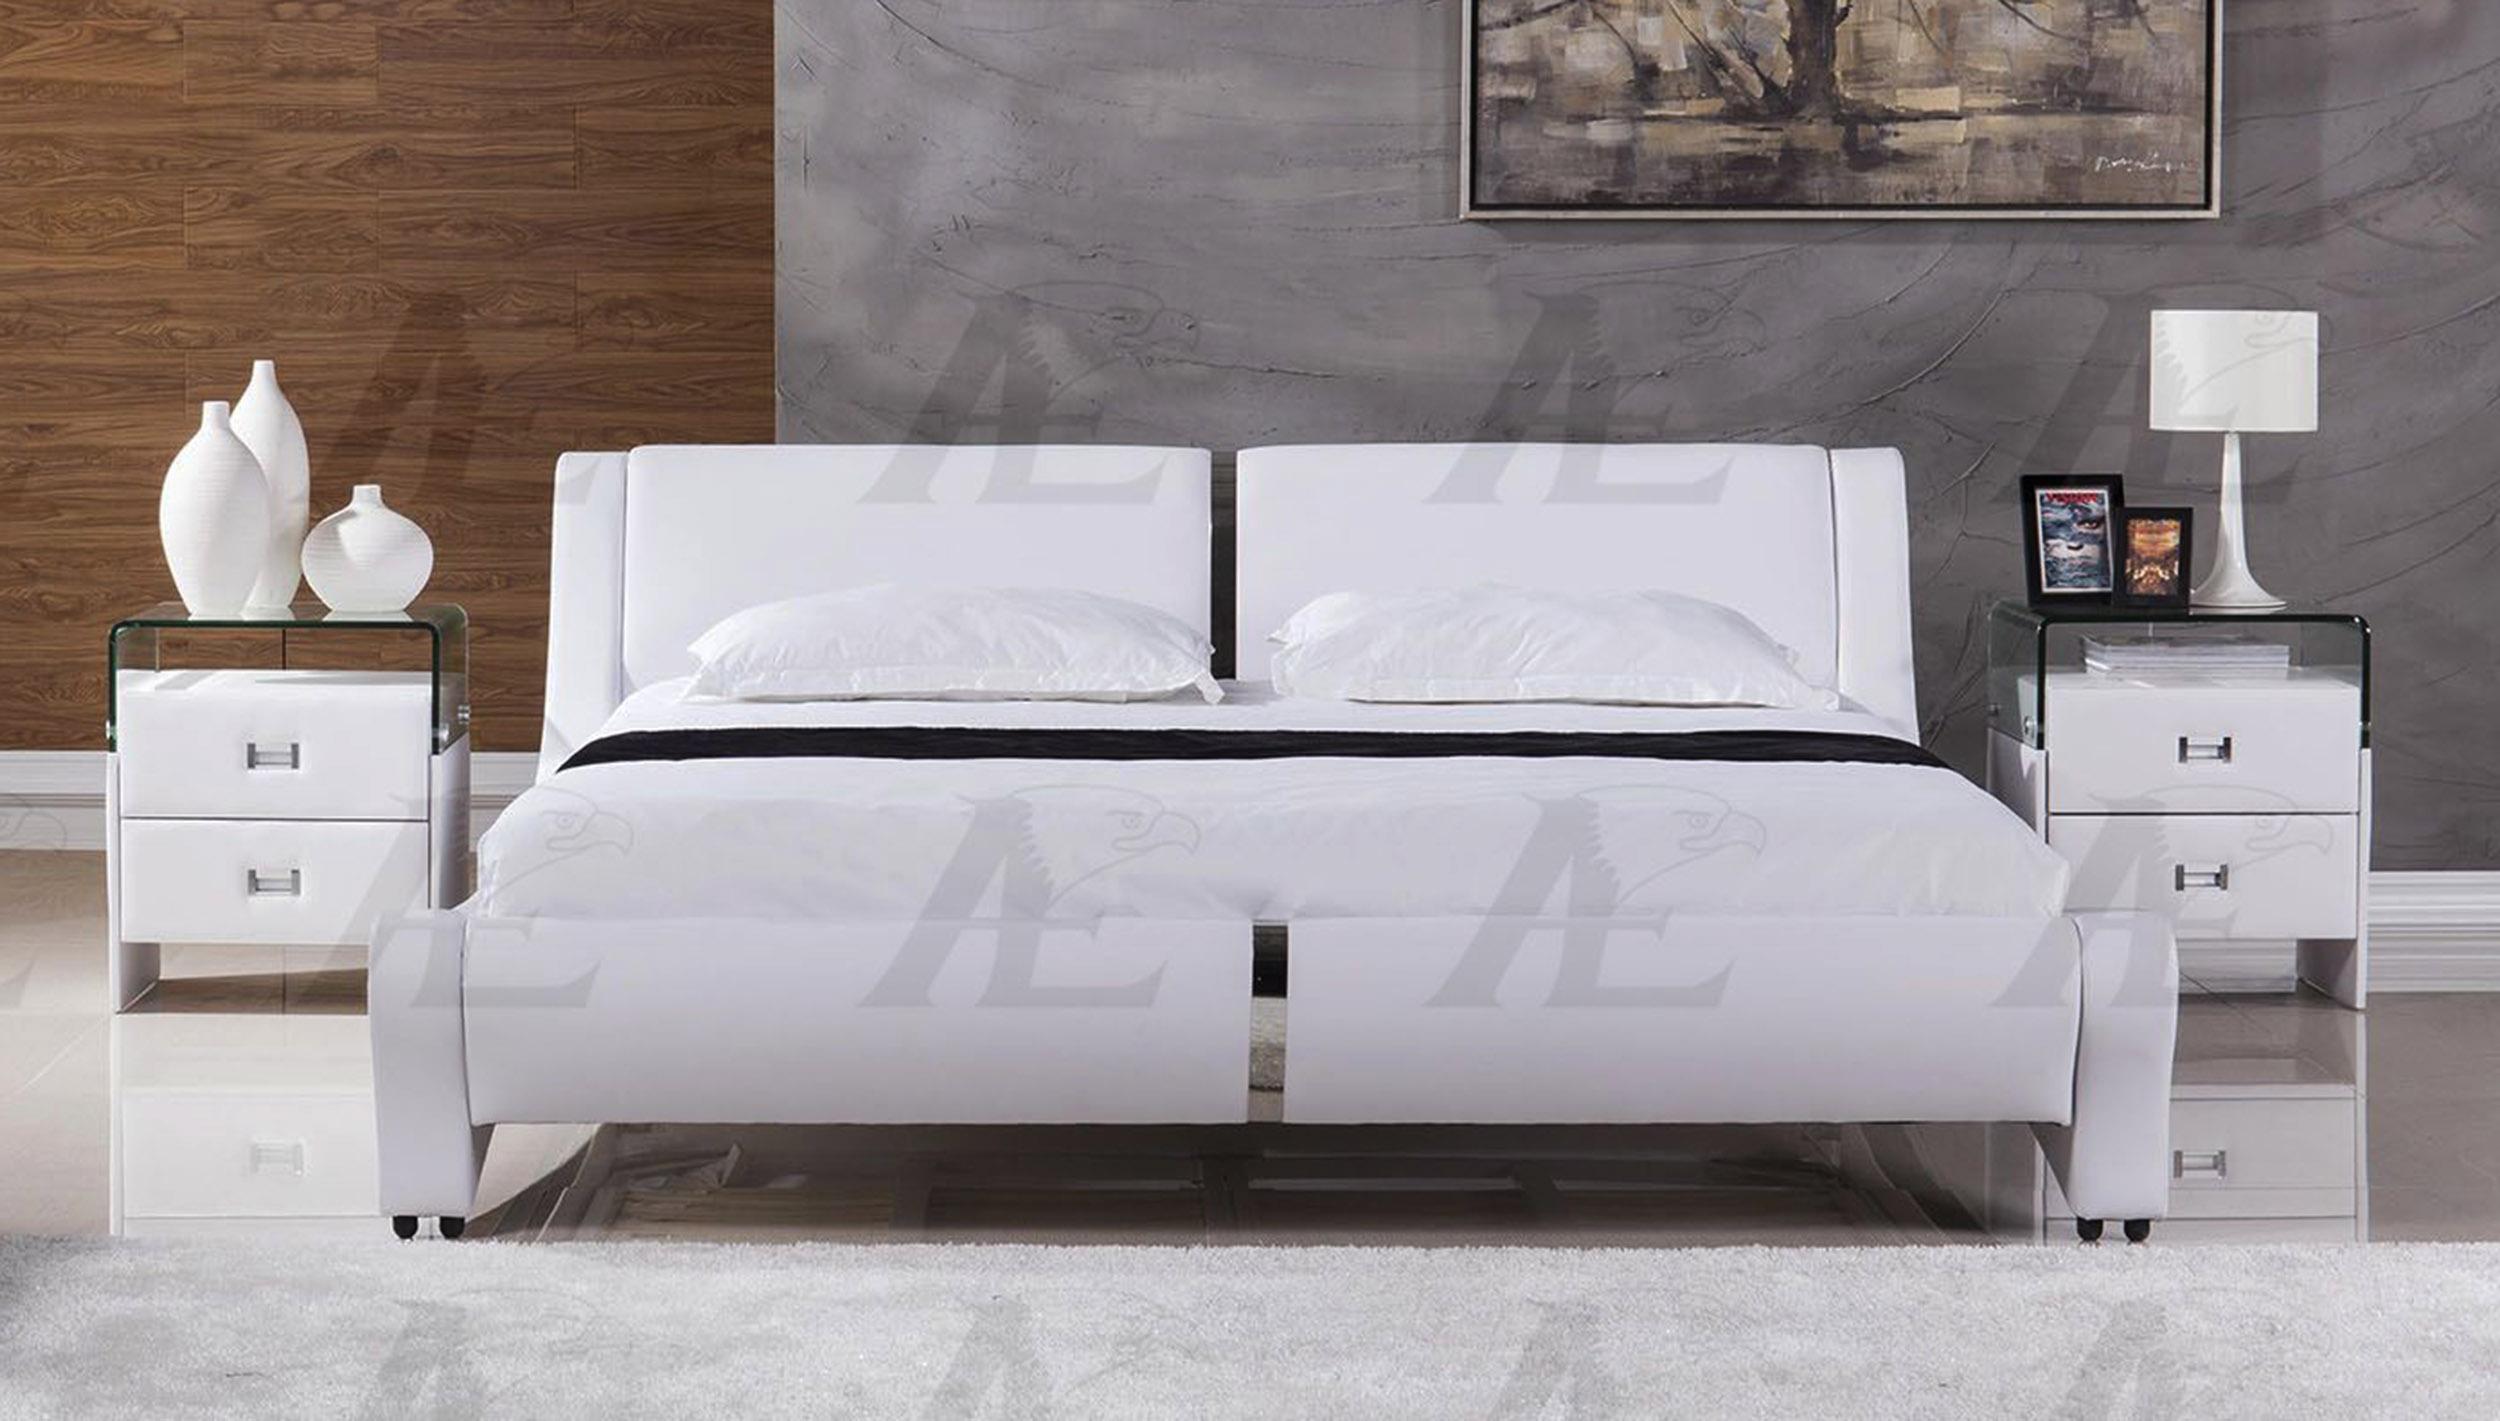 

                    
American Eagle Furniture B-D039 Platform Bed White PU Purchase 
